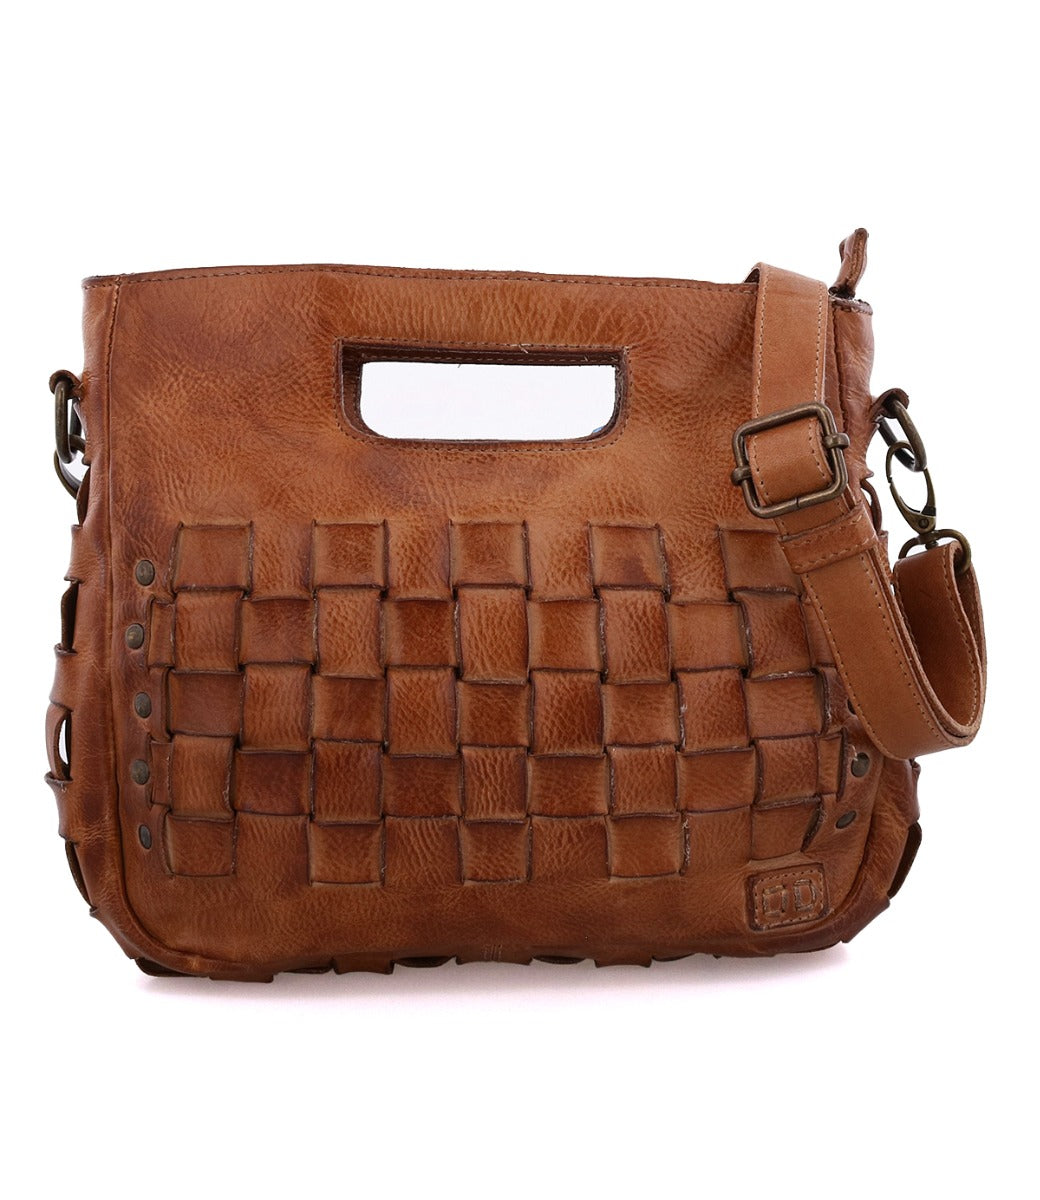 A Keiki tan leather handbag with a shoulder strap by Bed Stu.